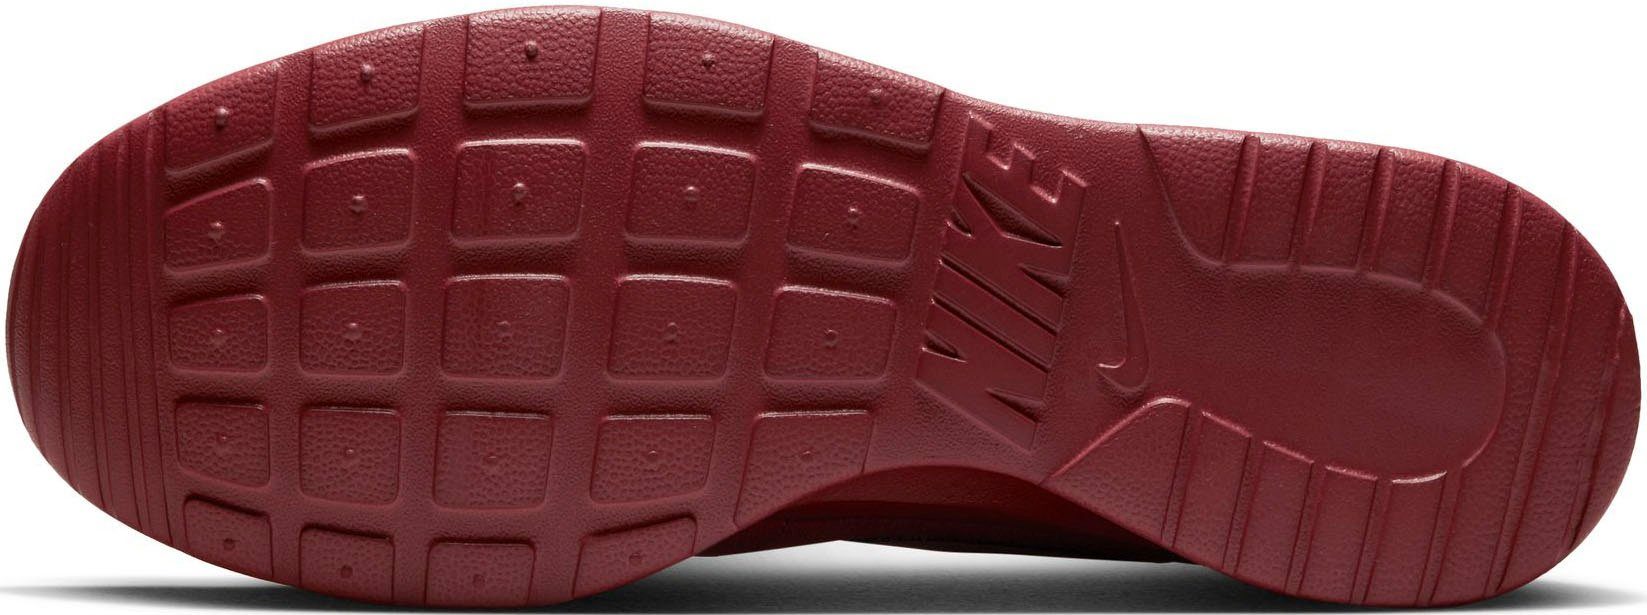 TANJUN Sneaker CANYON-RUST-DESERT-BERRY-VOLT Nike Sportswear REFINE WOMAN'S